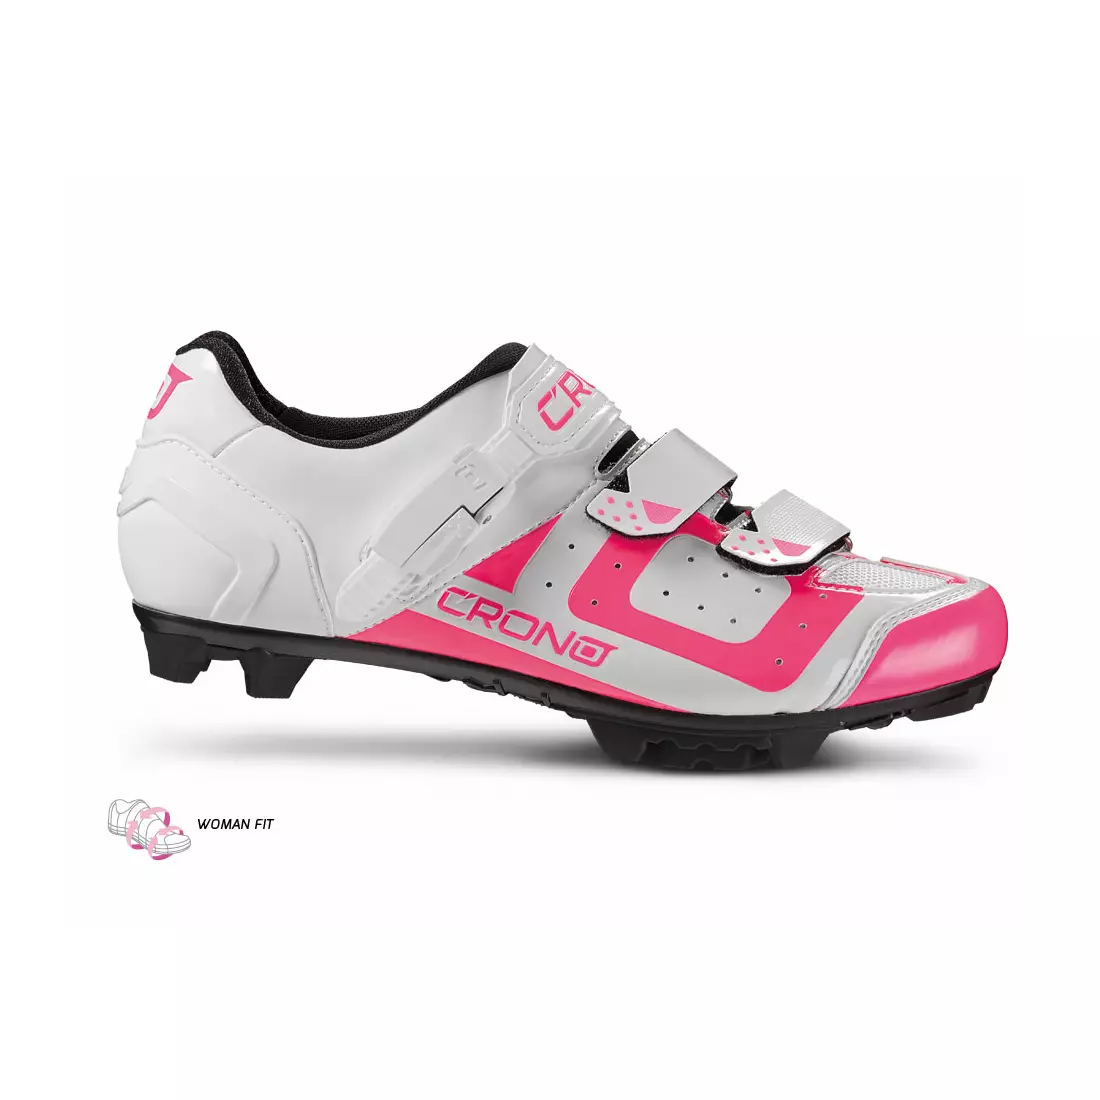 CRONO CX3 nylon women's MTB cycling shoes, white and pink